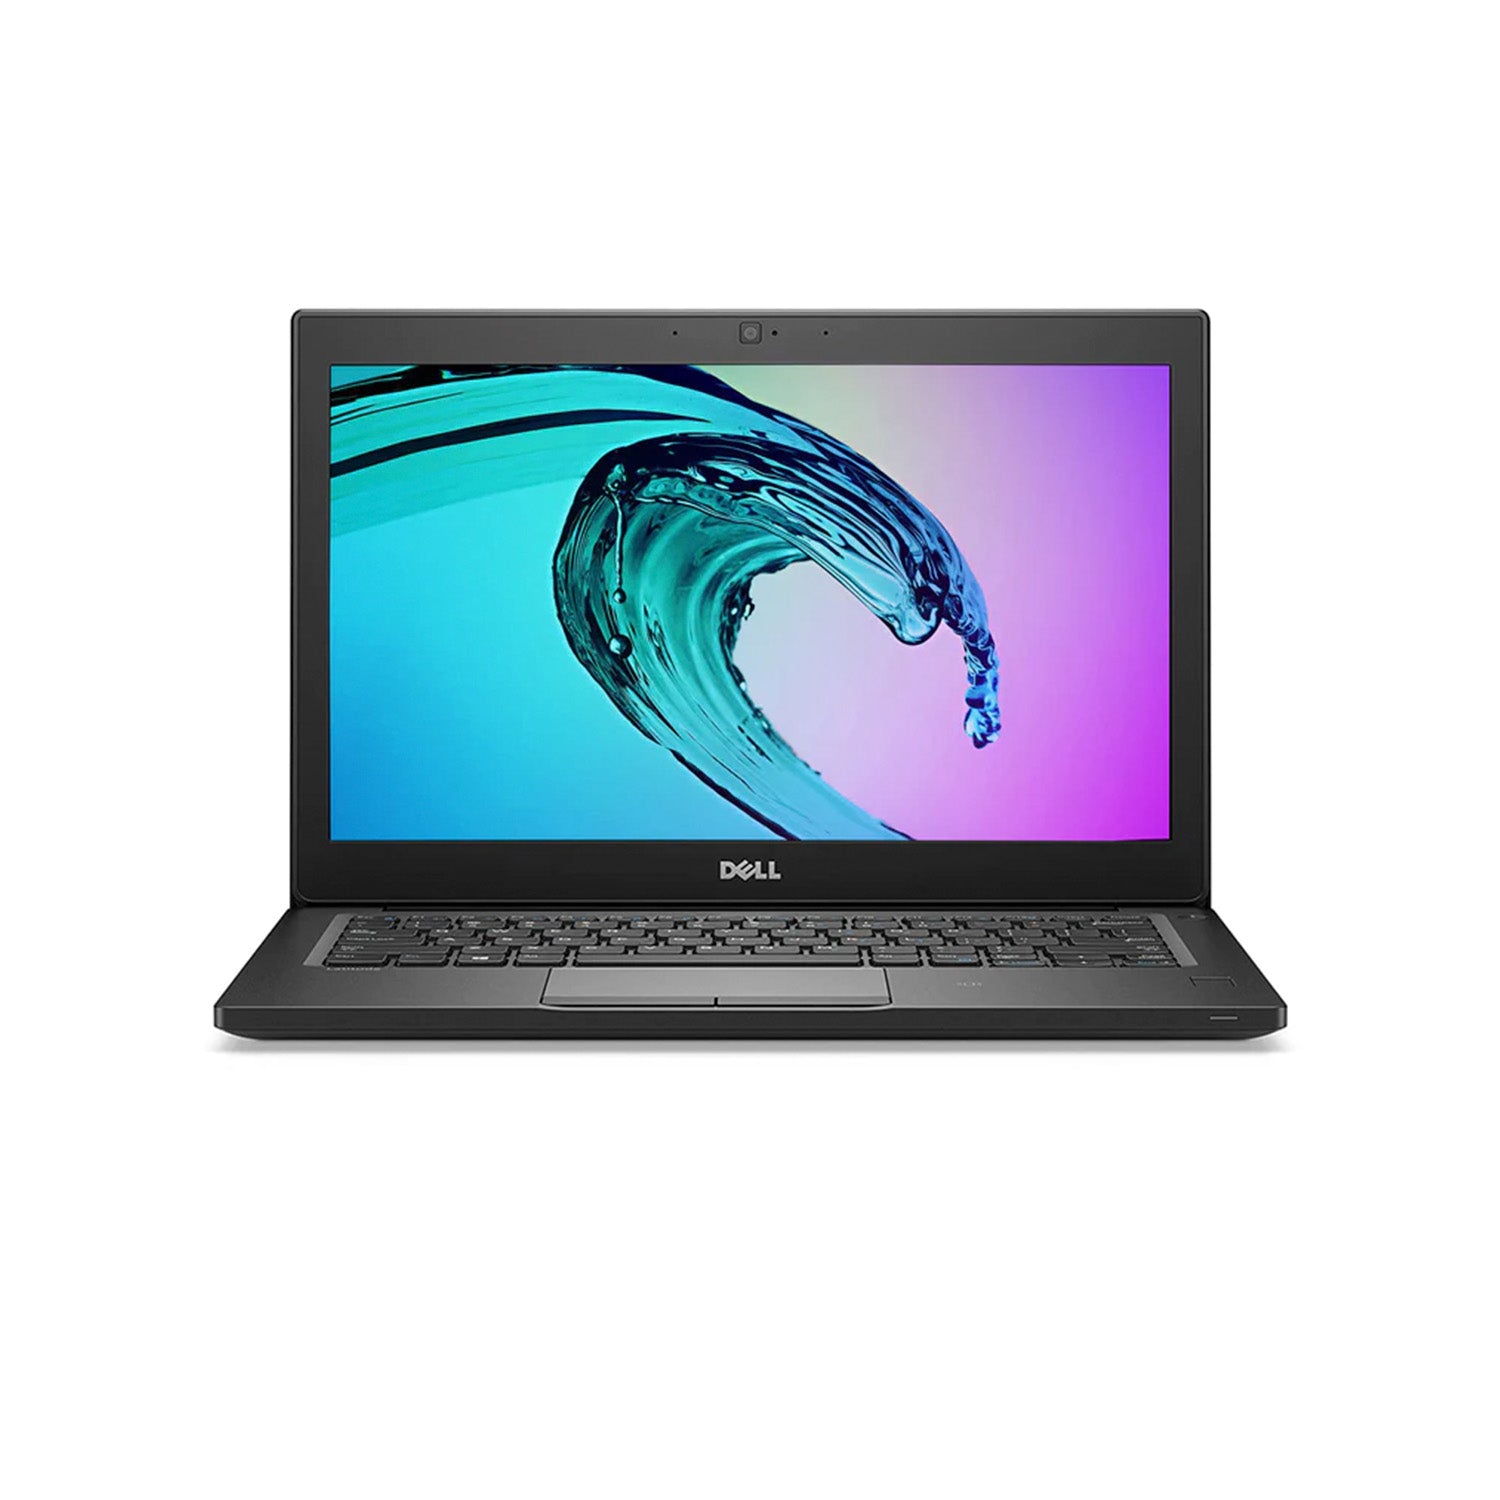 Dell Latitude 7280 Laptop 12.5 inch HD Display, Intel Core i7-6600U Up to 3.40 GHz, 8GB - 16GB RAM, 256GB - 1TB SSD, Webcam, WiFi, Windows 10 Pro - Refurbished